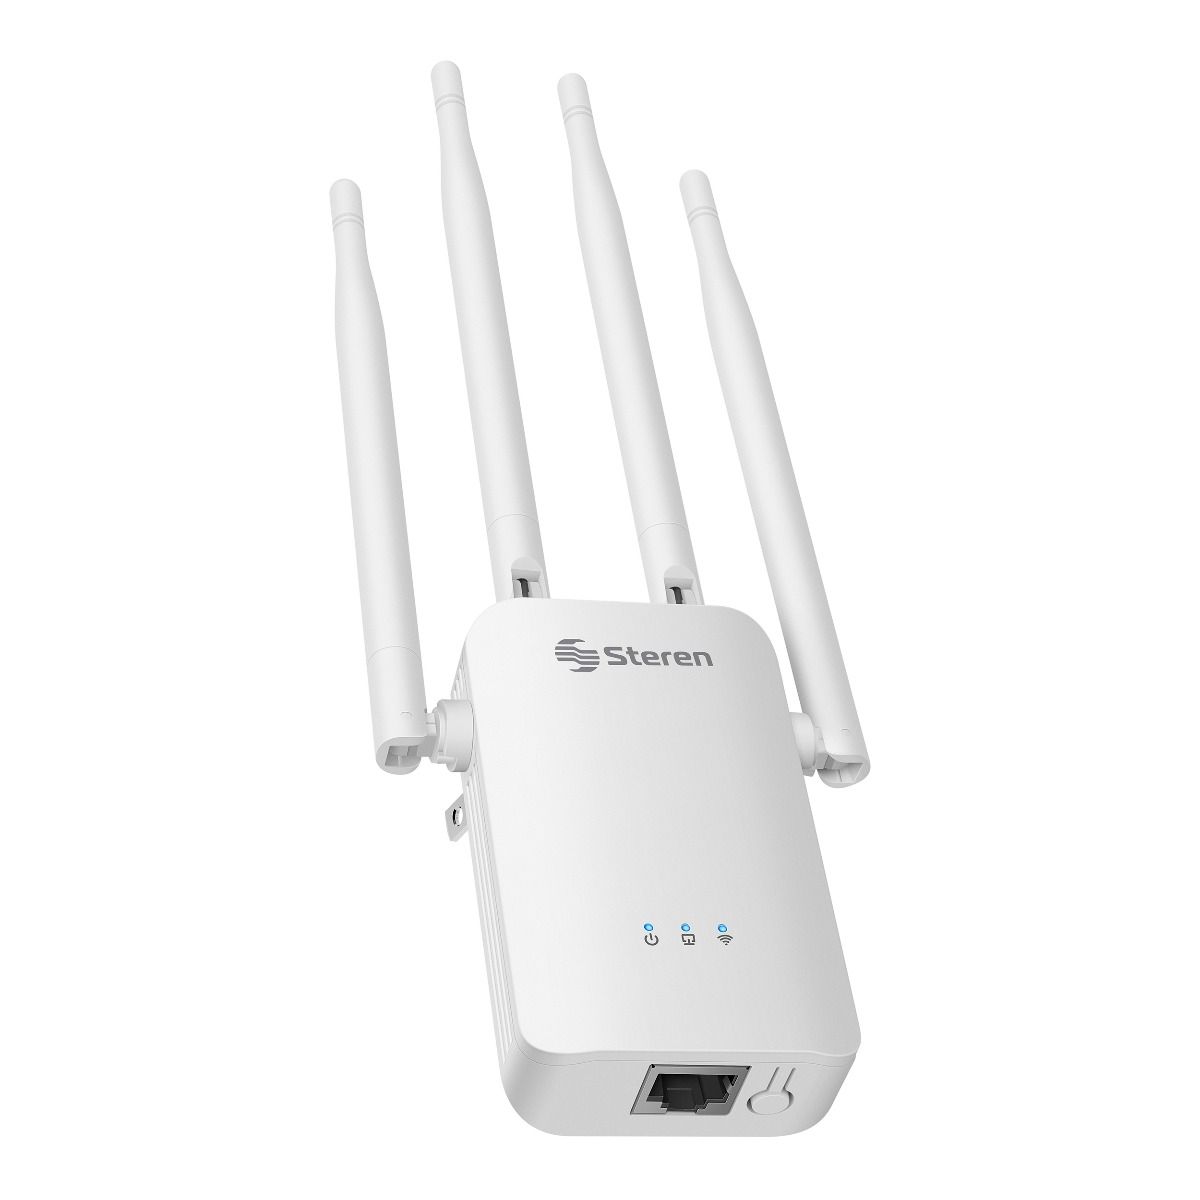 Ampliar señal Wifi con otro Router sin cables extender wifi facil barato 